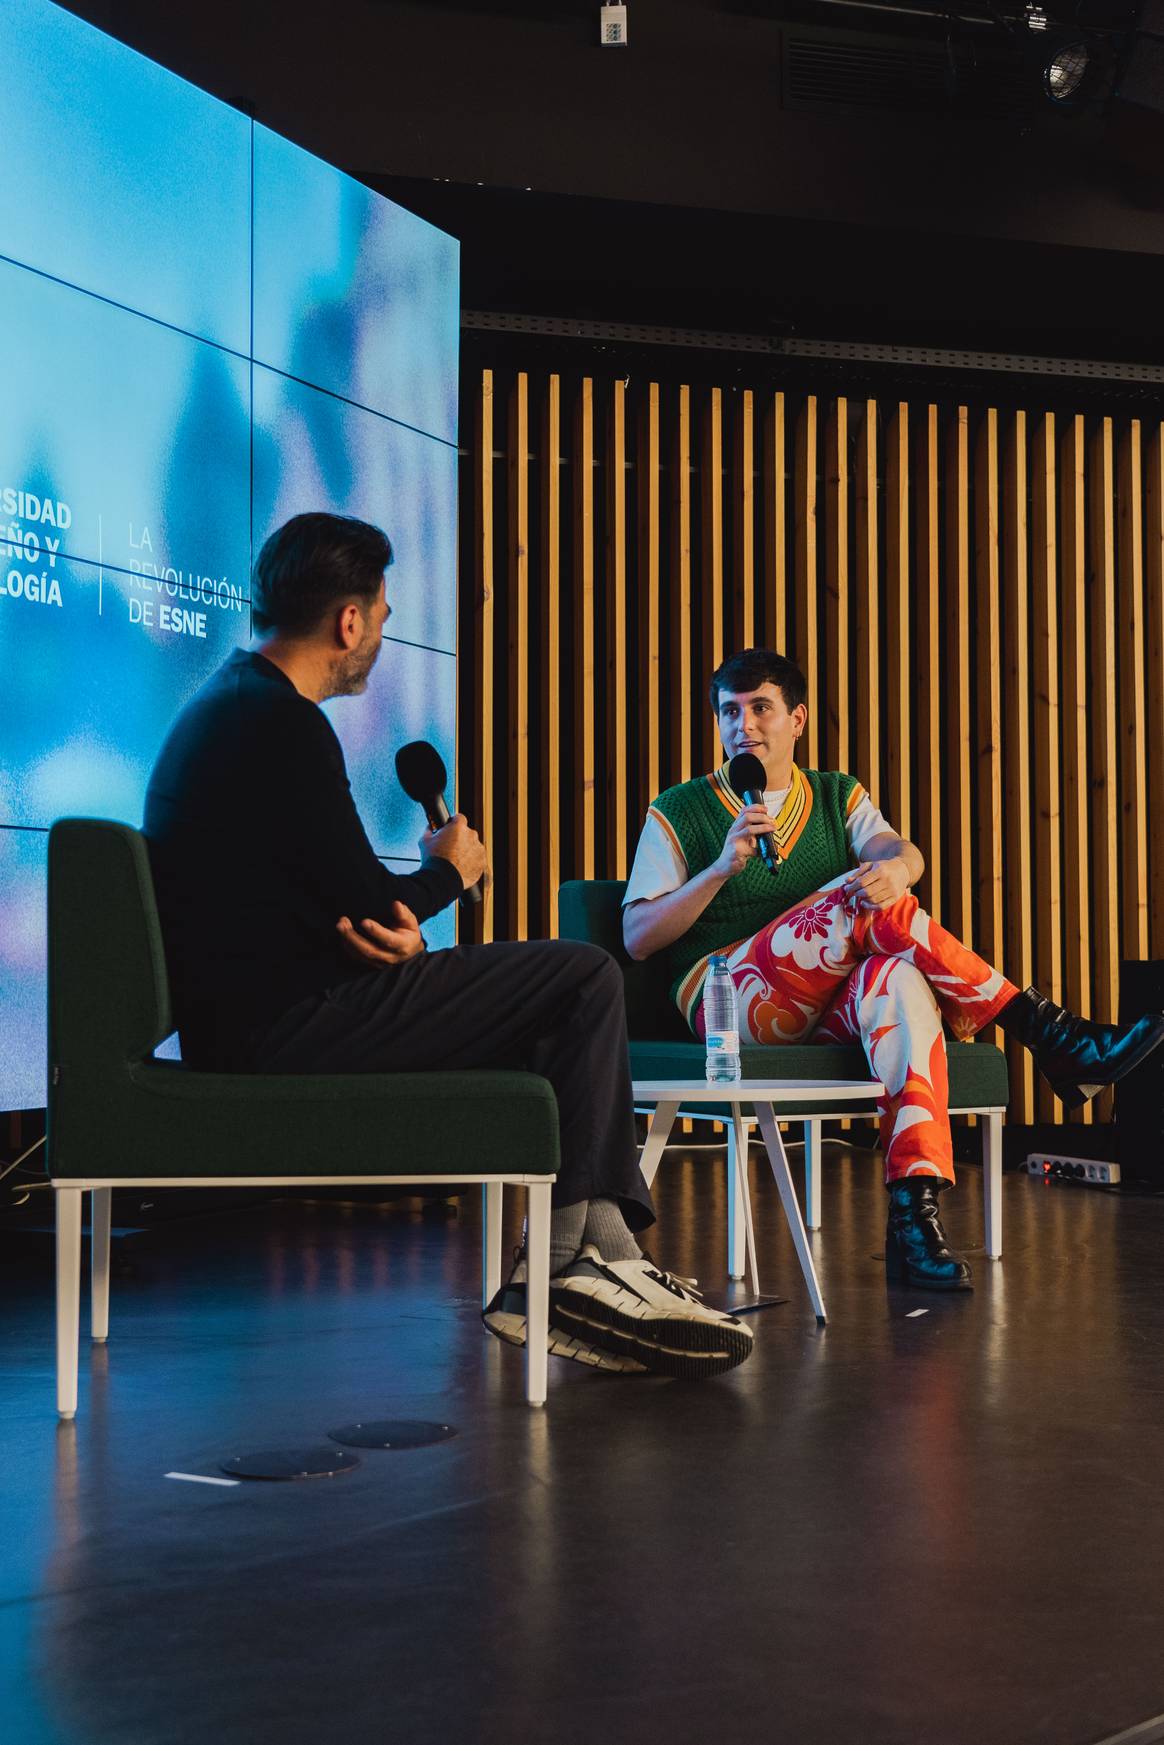 Spanish designer Alejandro Gómez Palomo (right) in conversation with fashion journalist Rafael Muñoz during the university's first Fashion Communication Week. Image courtesy of UDIT.